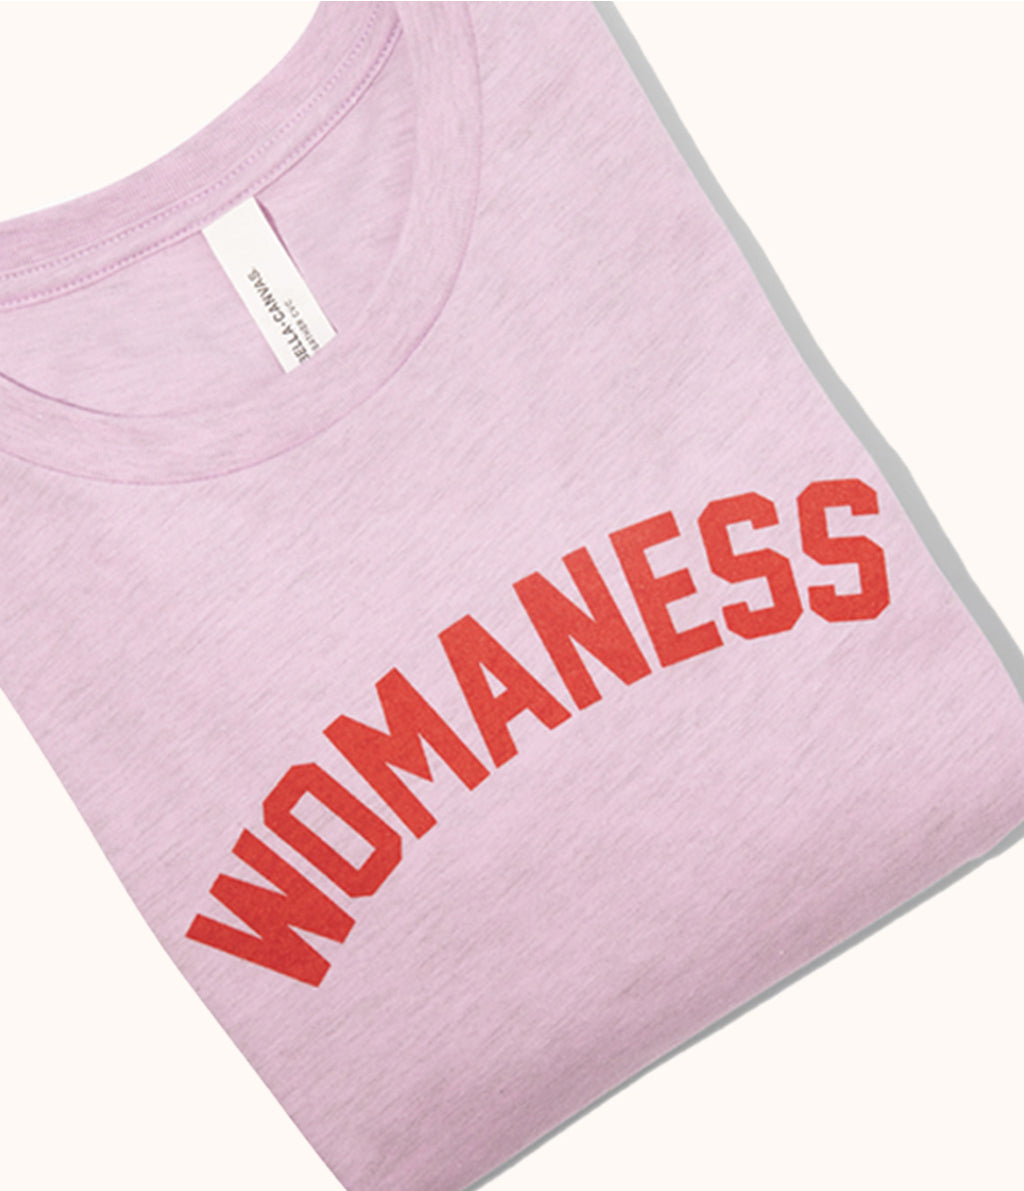 Womaness T-Shirt